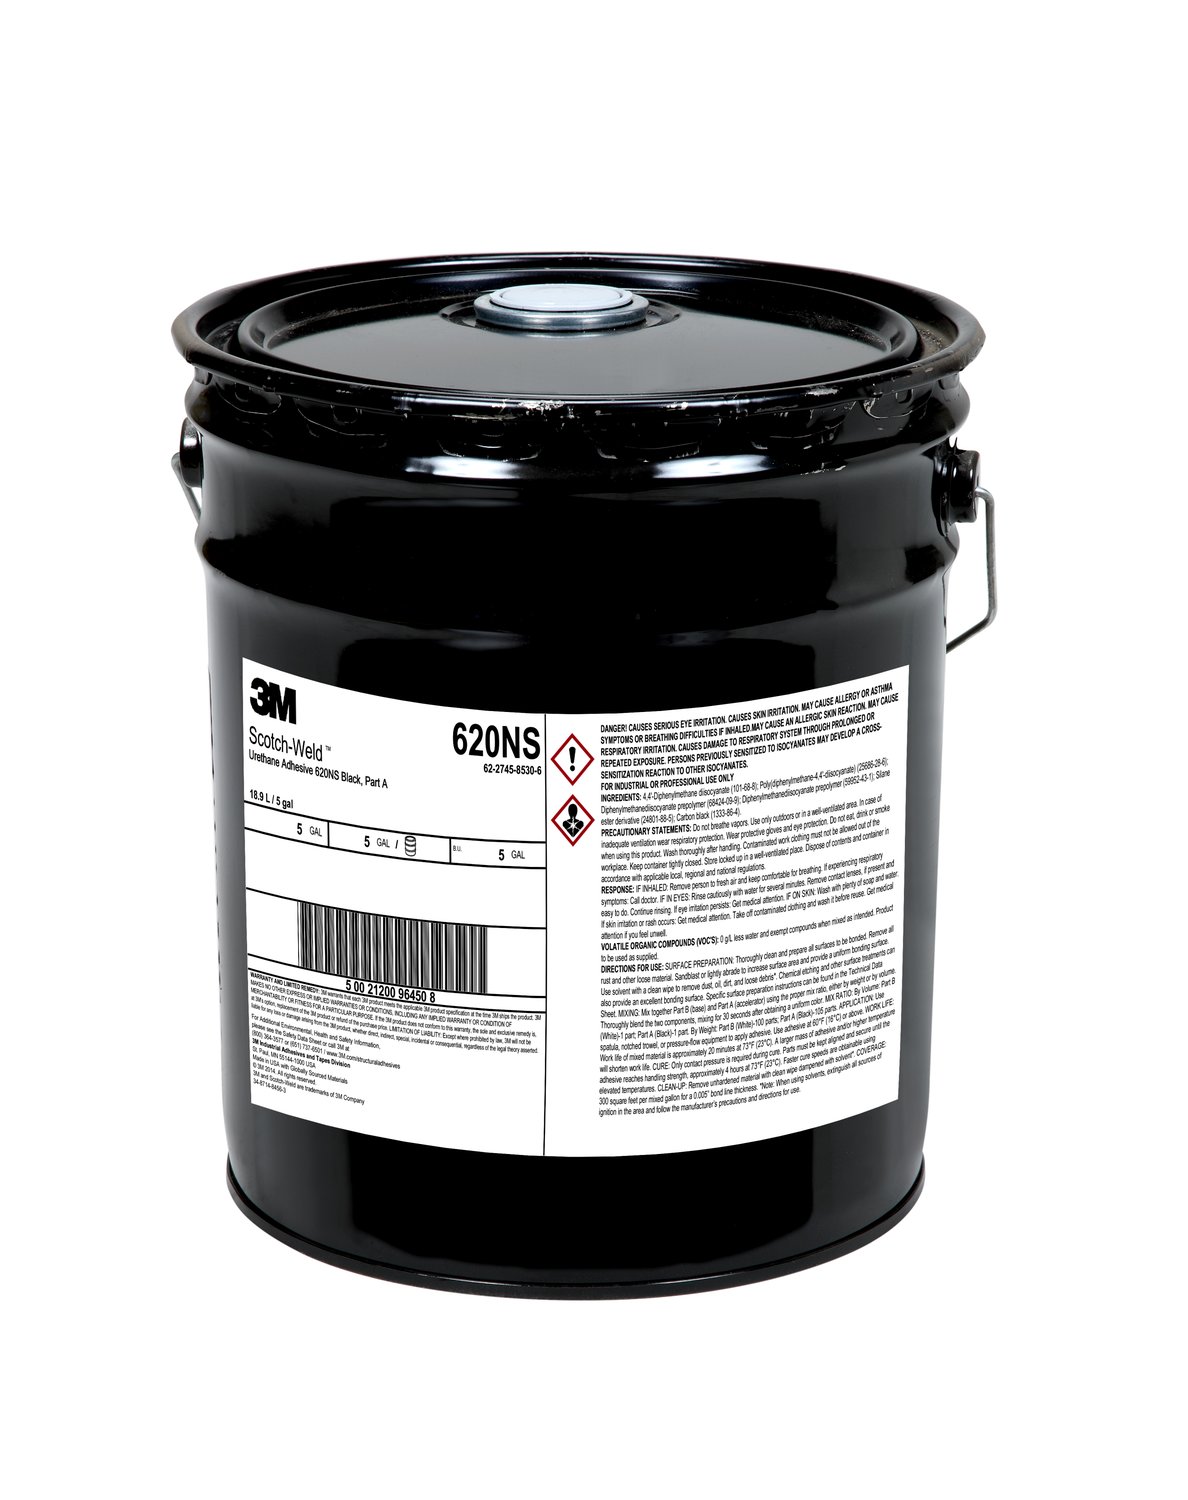 7010329537 - 3M Scotch-Weld Urethane Adhesive 620NS, Black, Part A, 5 Gallon
(Pail), Drum